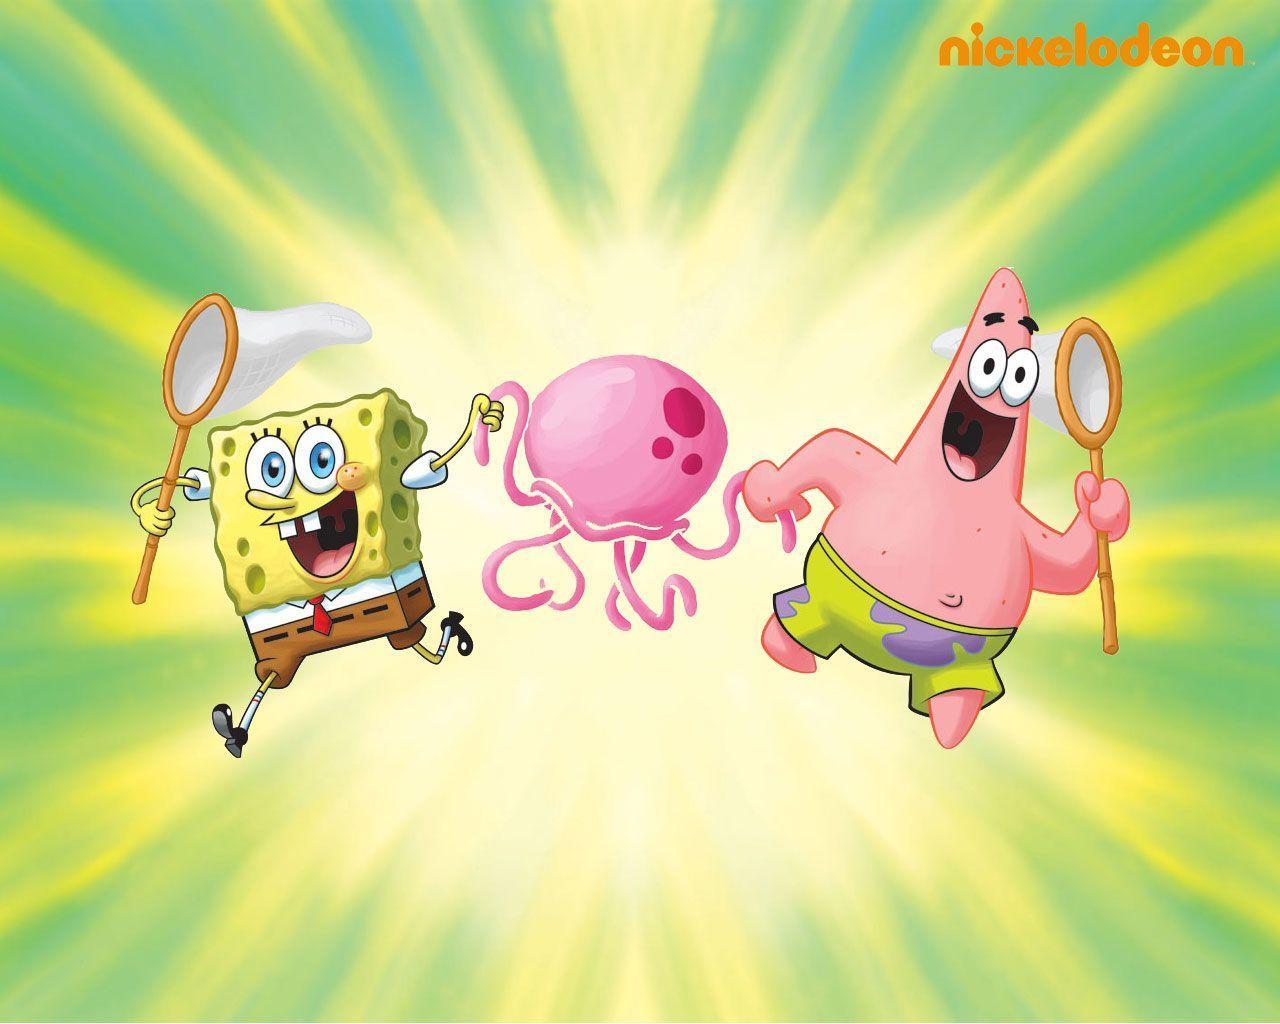 Spongebob & Patrick.